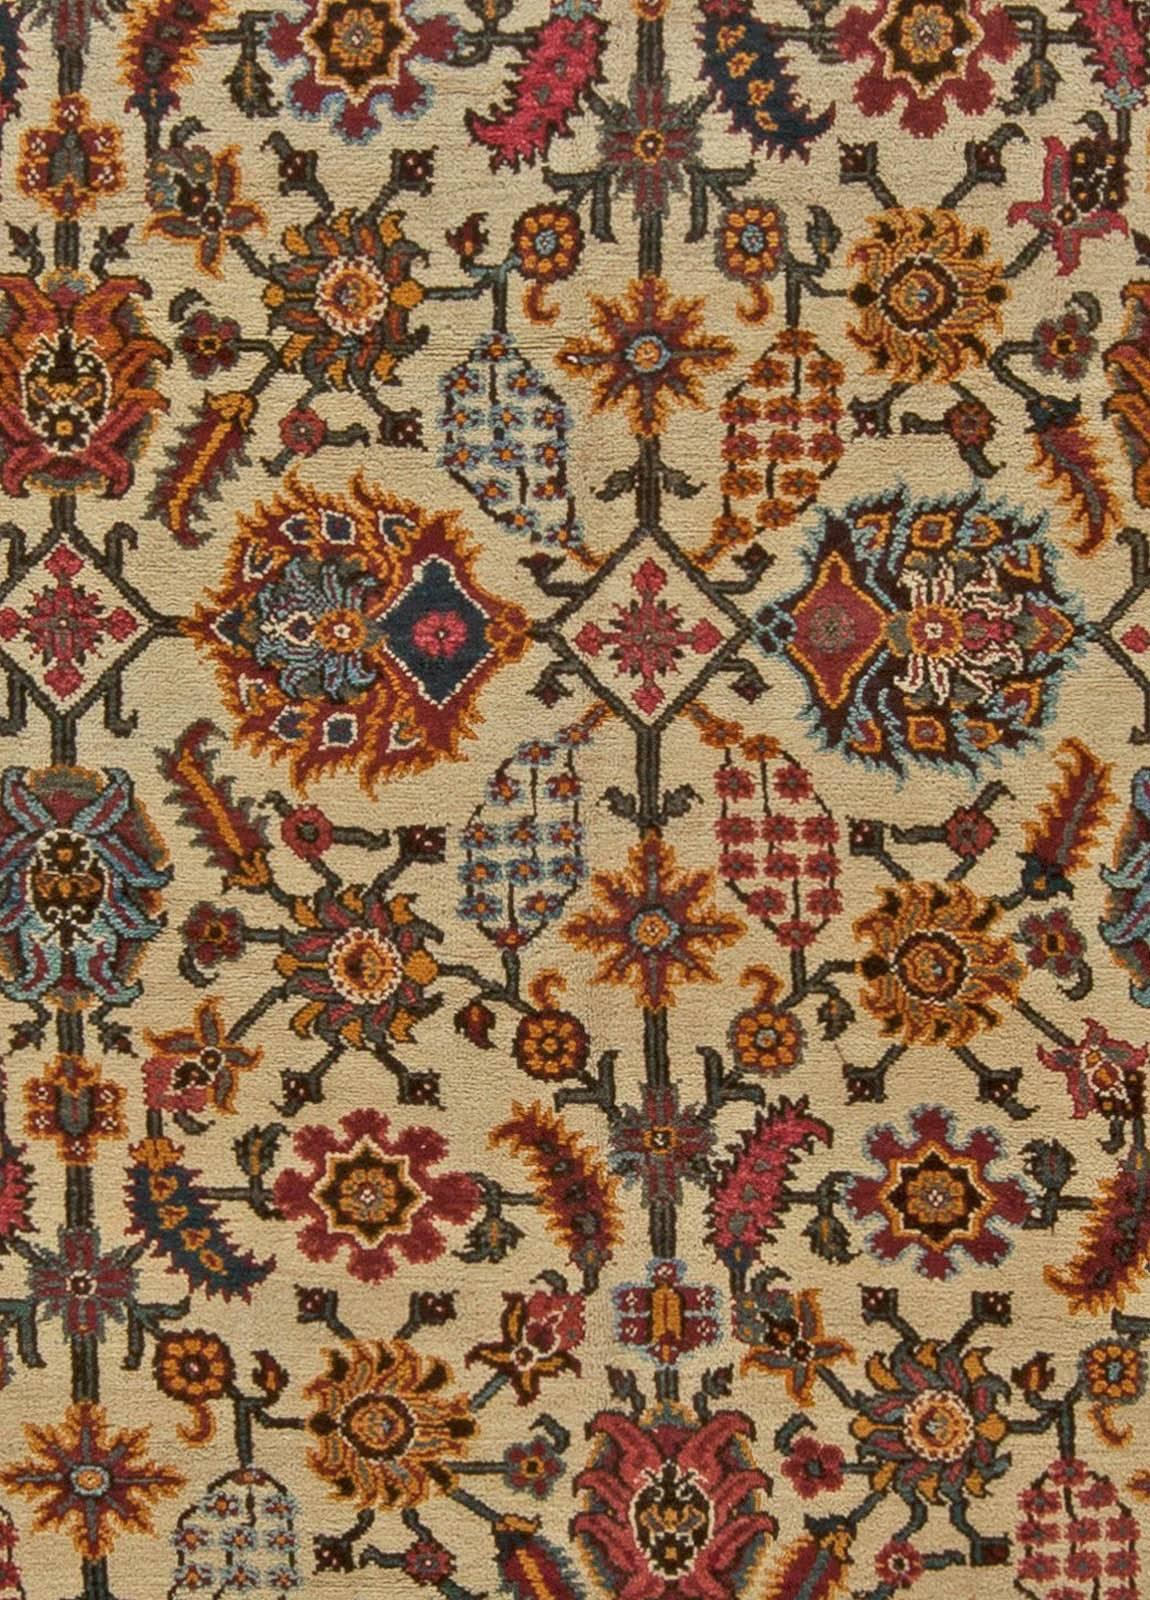 Fine Antique Indian Botanic Handmade Wool Rug
Size: 11'2